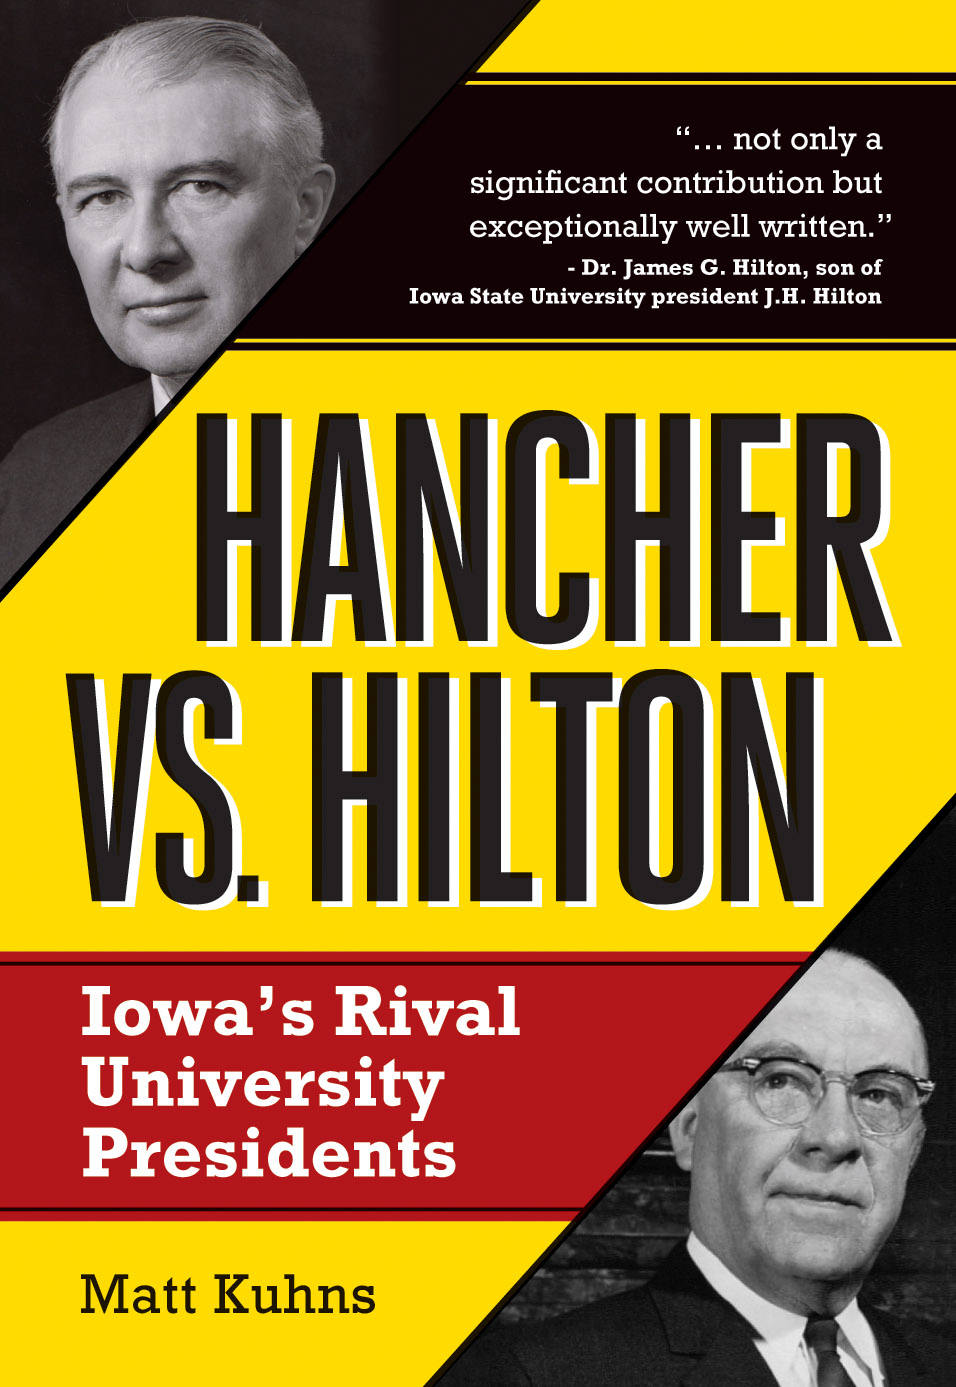 Hancher vs. Hilton: Iowa's Rival University Presidents